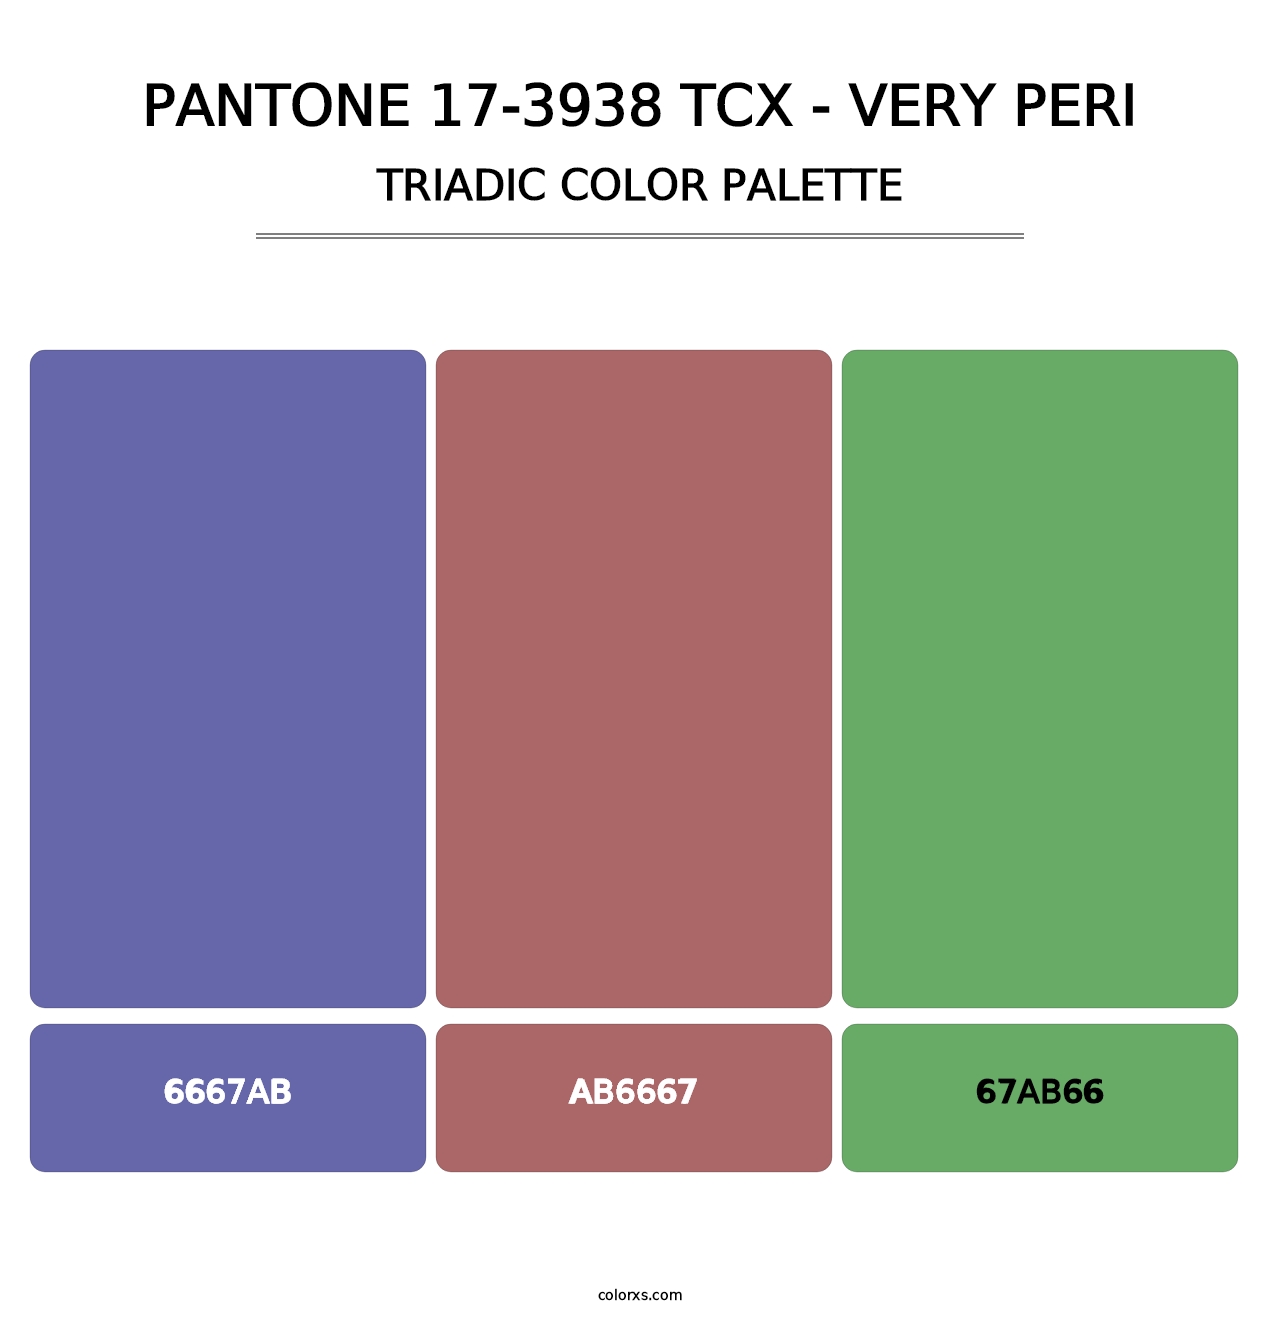 PANTONE 17-3938 TCX - Very Peri - Triadic Color Palette